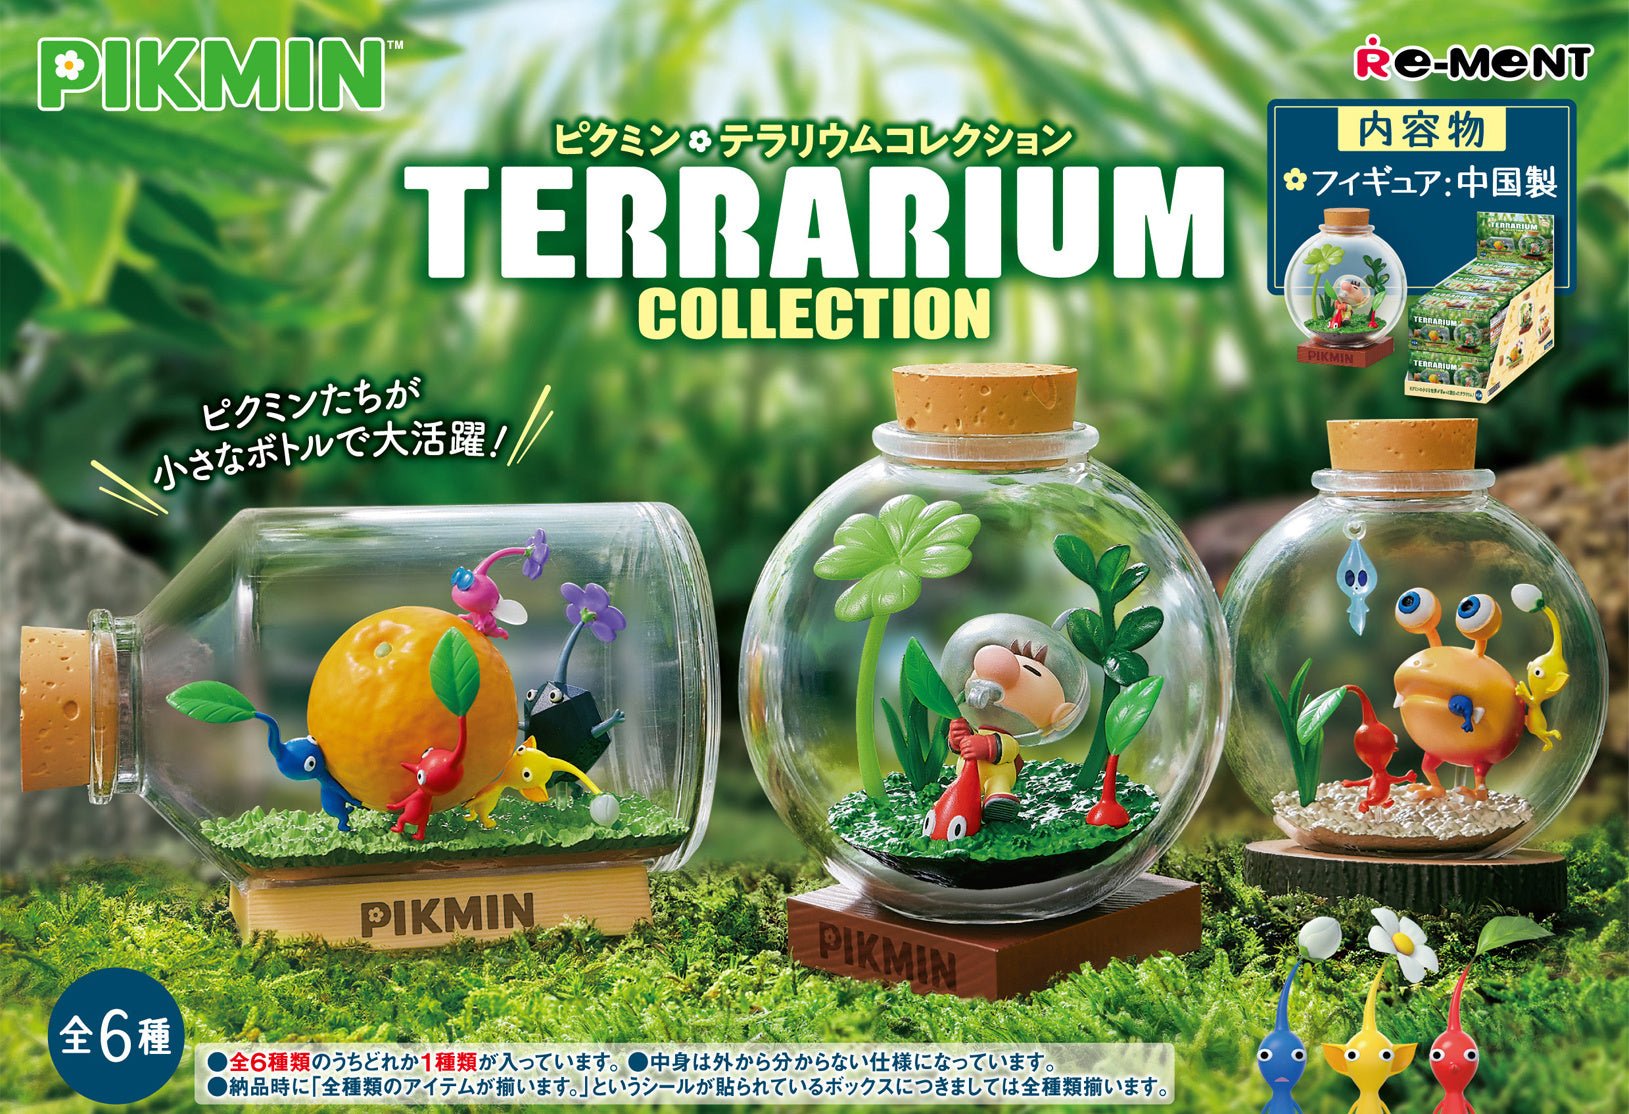 Re-Ment - Pikmin: Terrarium Collection: 1 Random Pull - Good Game Anime